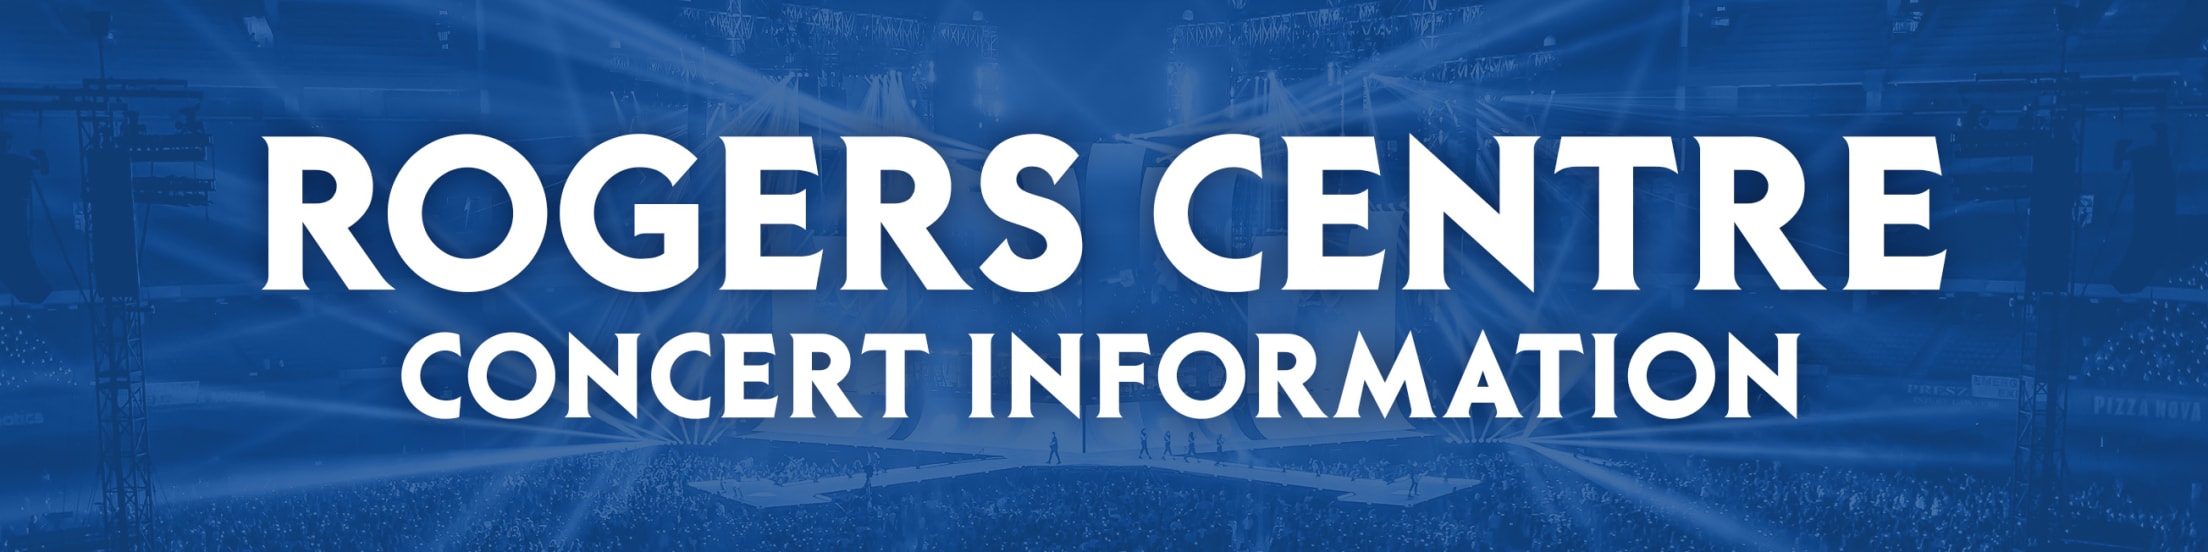 Rogers Centre Concert Information